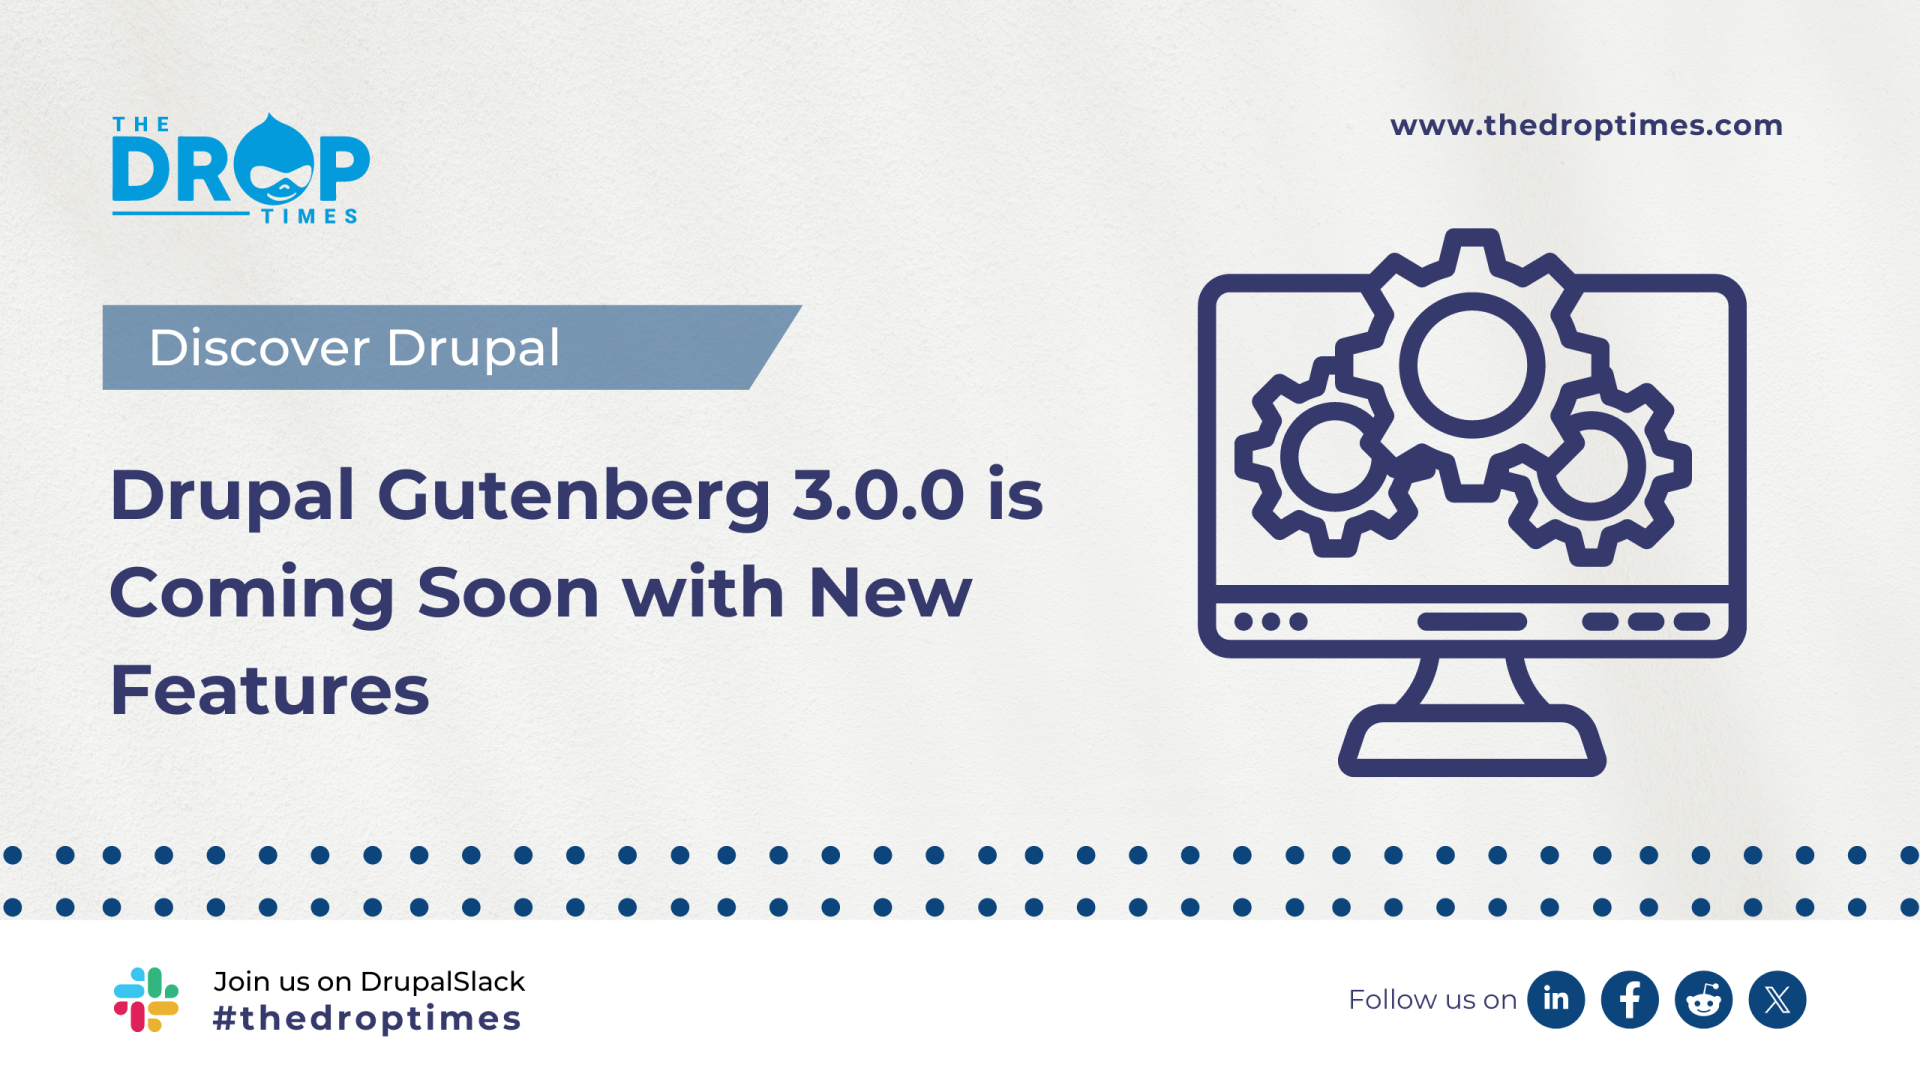 Drupal Gutenberg 3.0.0